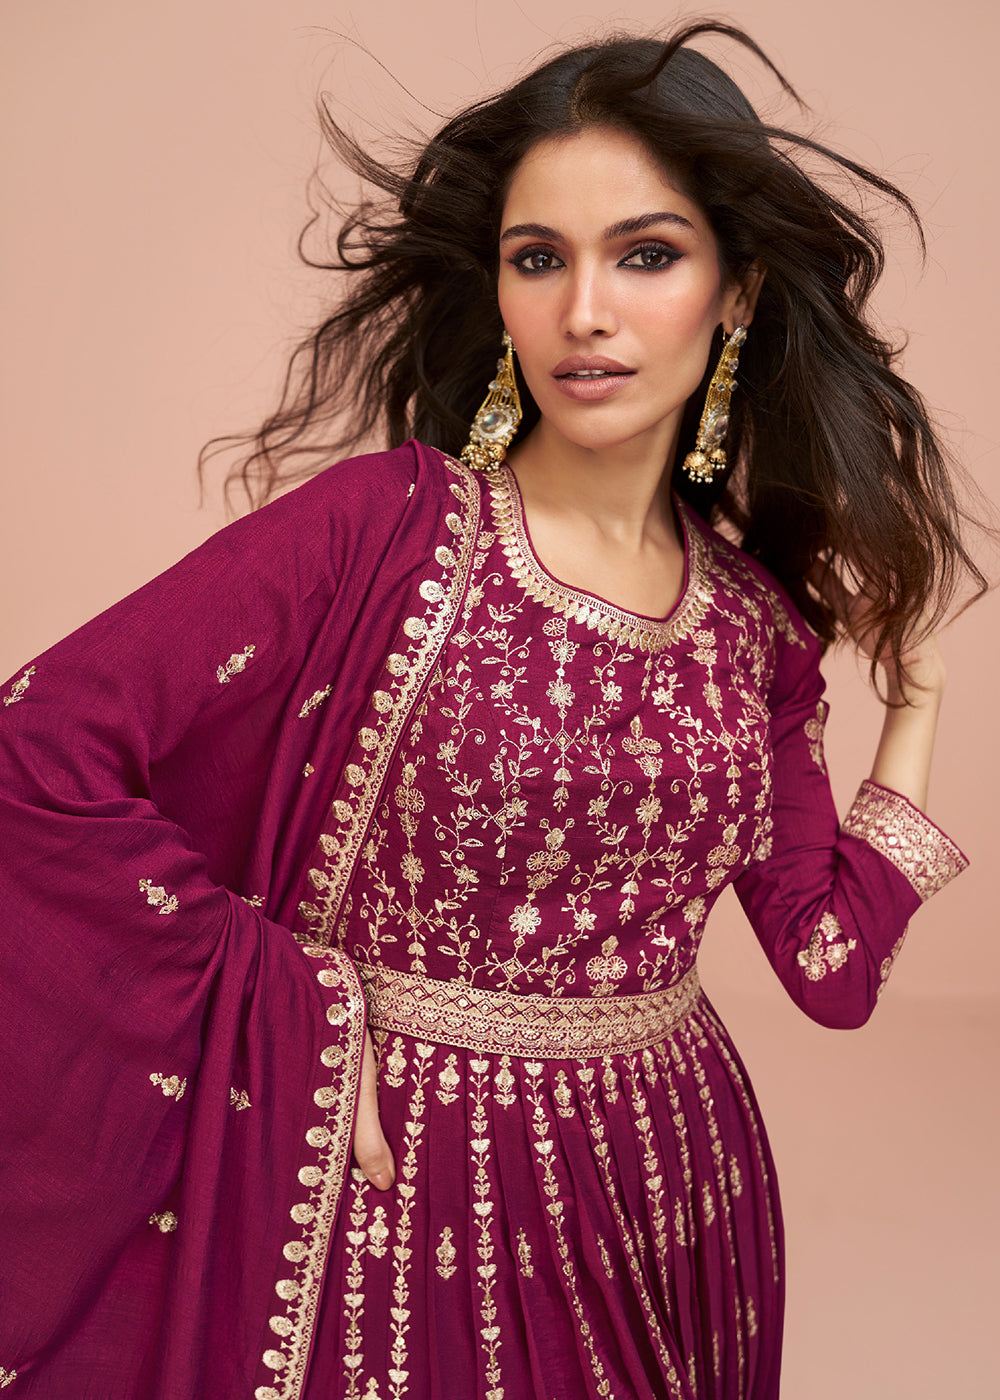 Buy Now Rani Pink Wedding Wear Silk Trendy Palazzo Suit Online in USA, UK, Canada, Germany, Australia & Worldwide at Empress Clothing. 